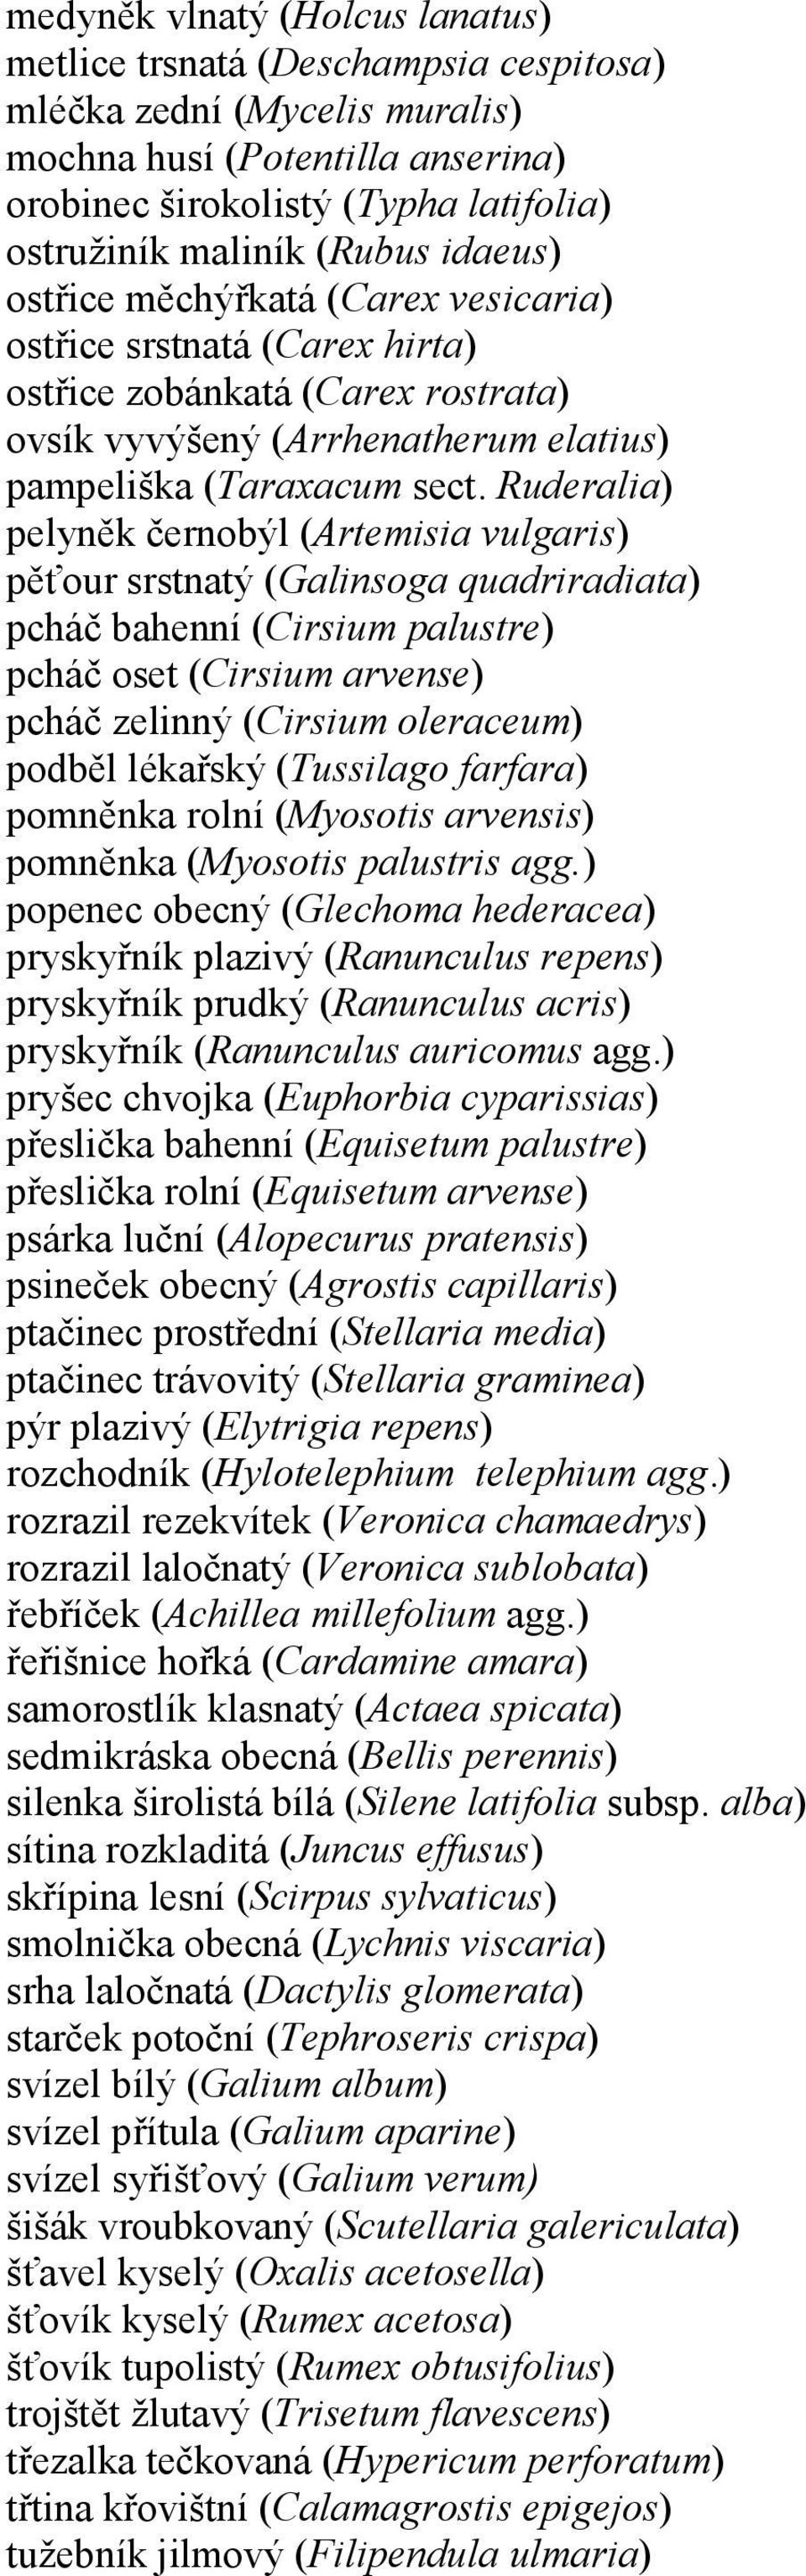 Ruderalia) pelyněk černobýl (Artemisia vulgaris) pěťour srstnatý (Galinsoga quadriradiata) pcháč bahenní (Cirsium palustre) pcháč oset (Cirsium arvense) pcháč zelinný (Cirsium oleraceum) podběl